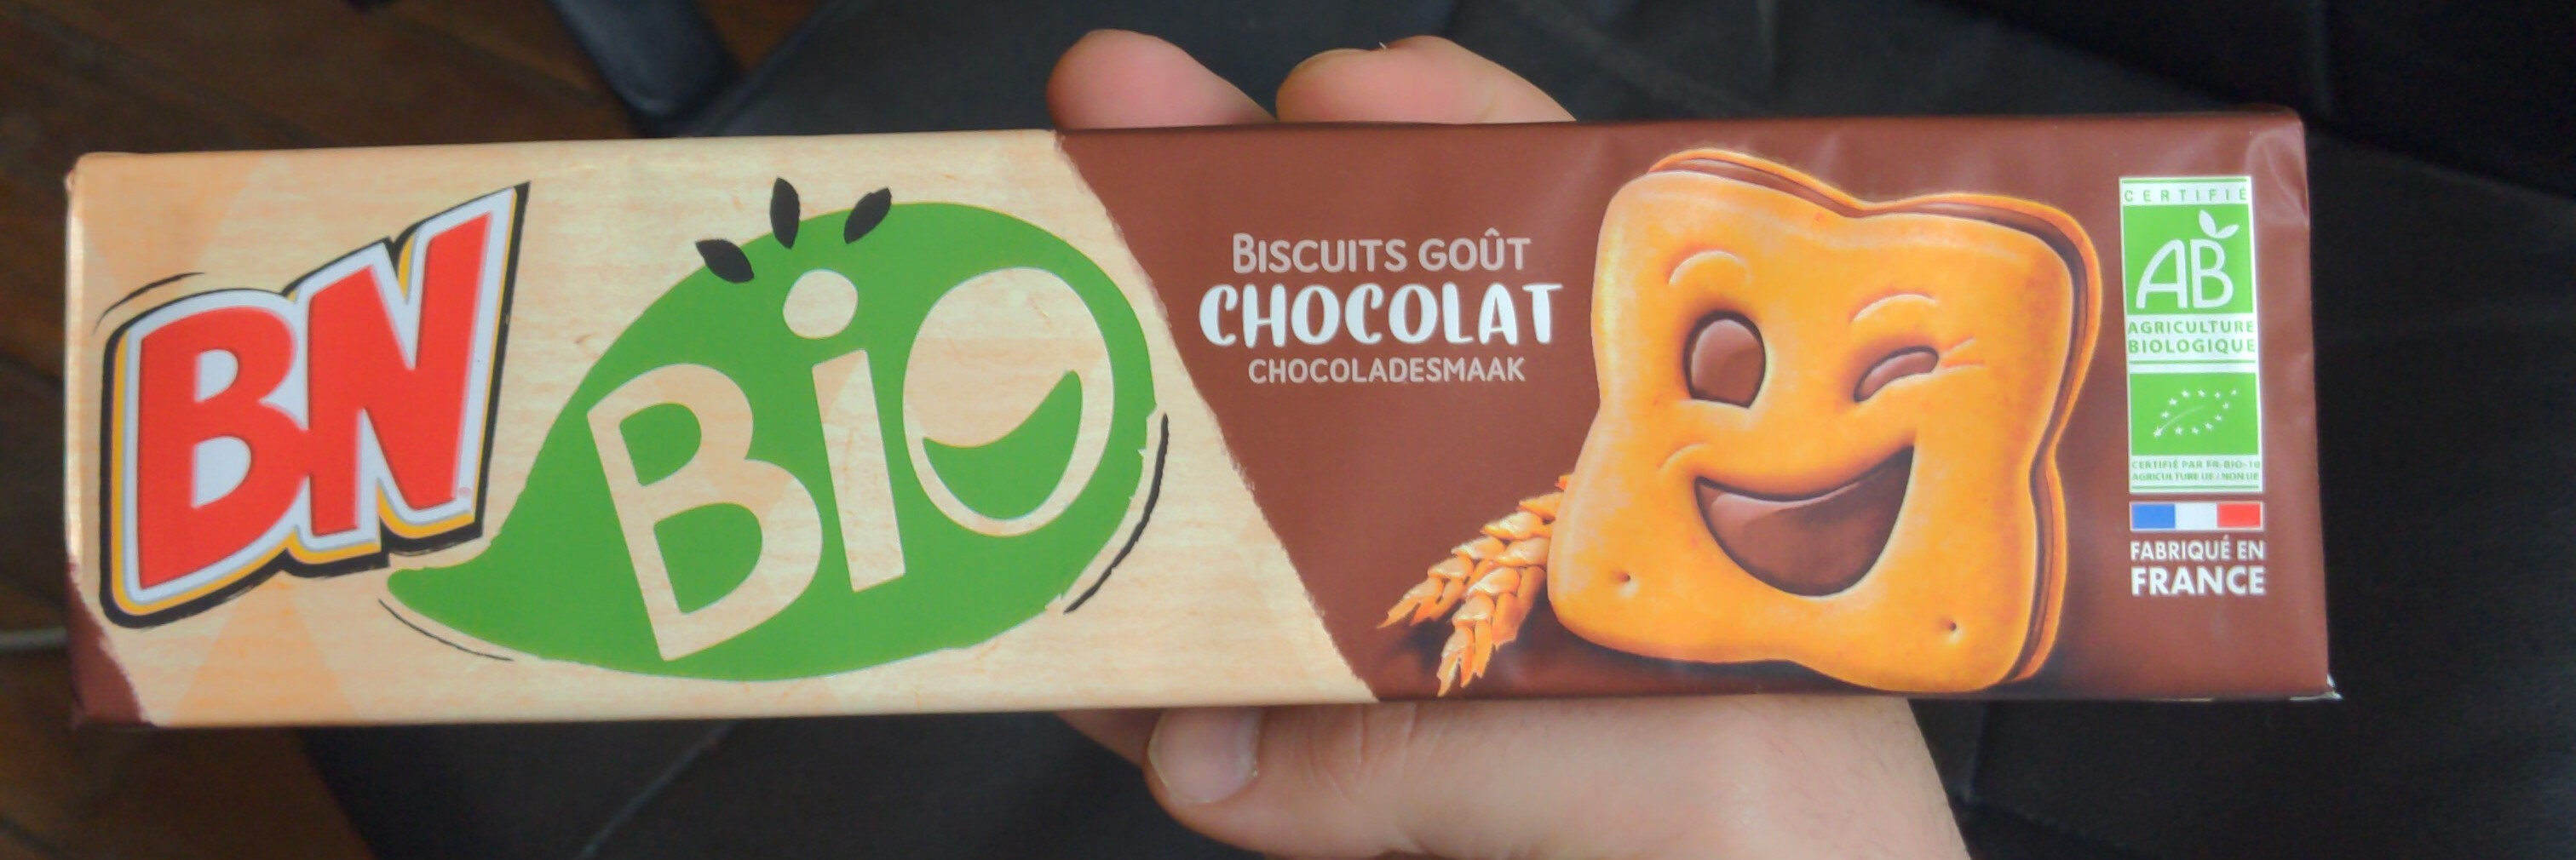 Biscuits goût chocolat - Produit